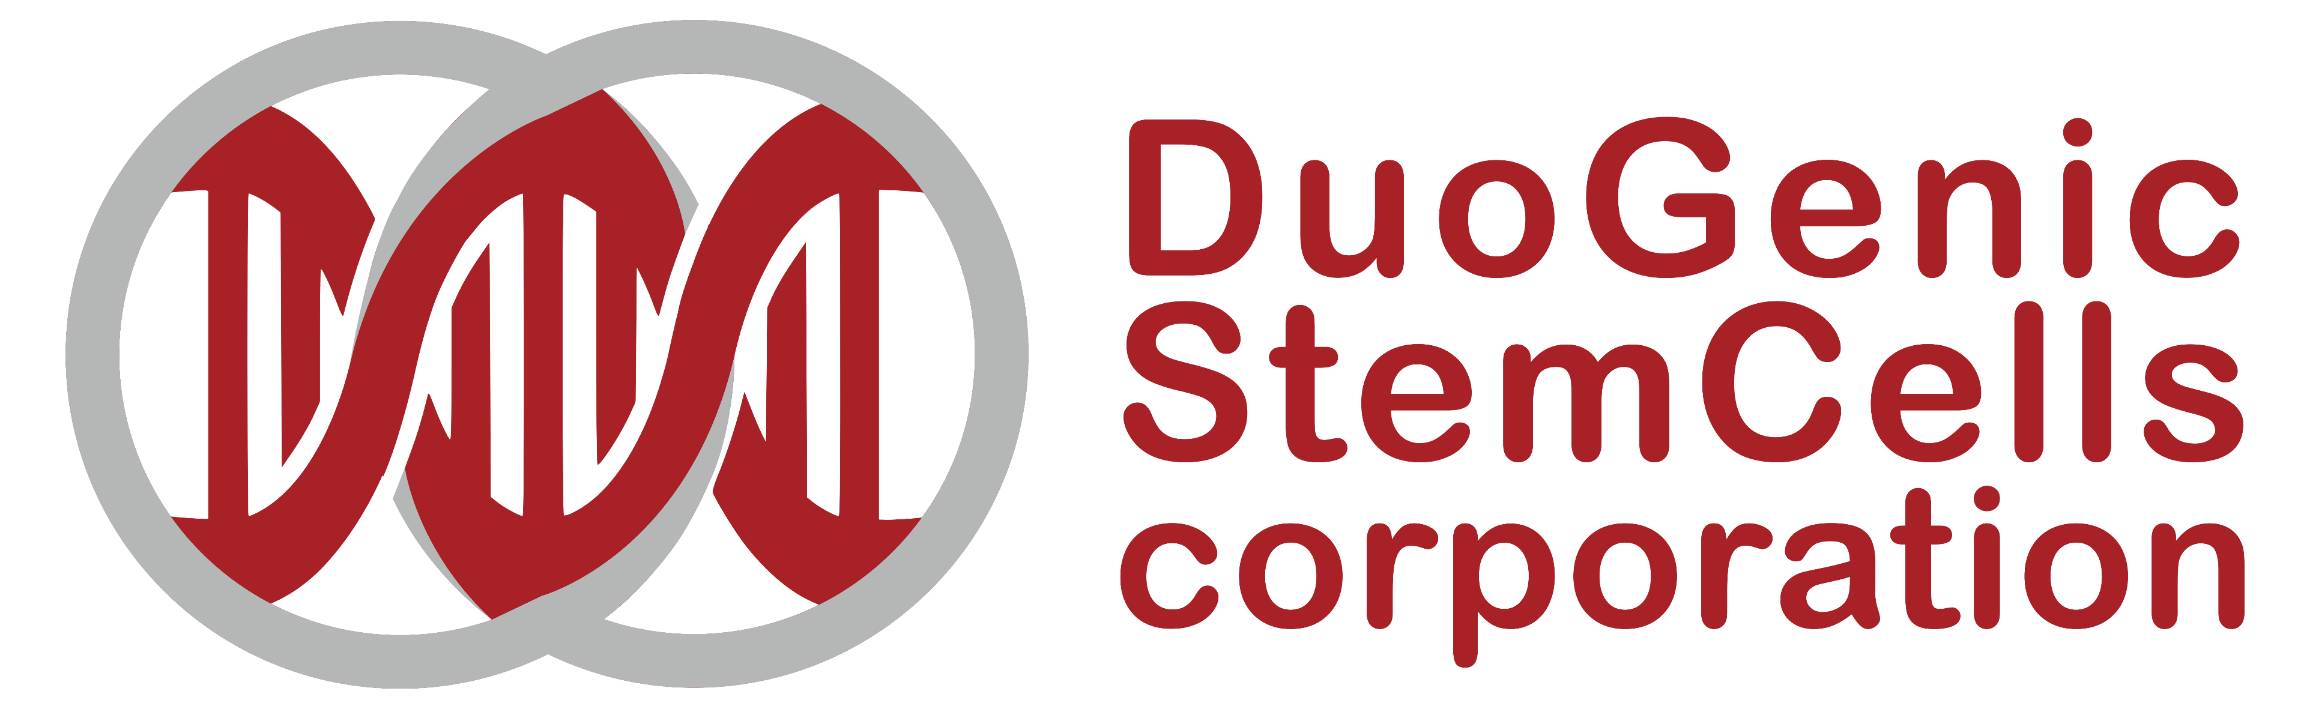 DuoGenic StemCells Corporation